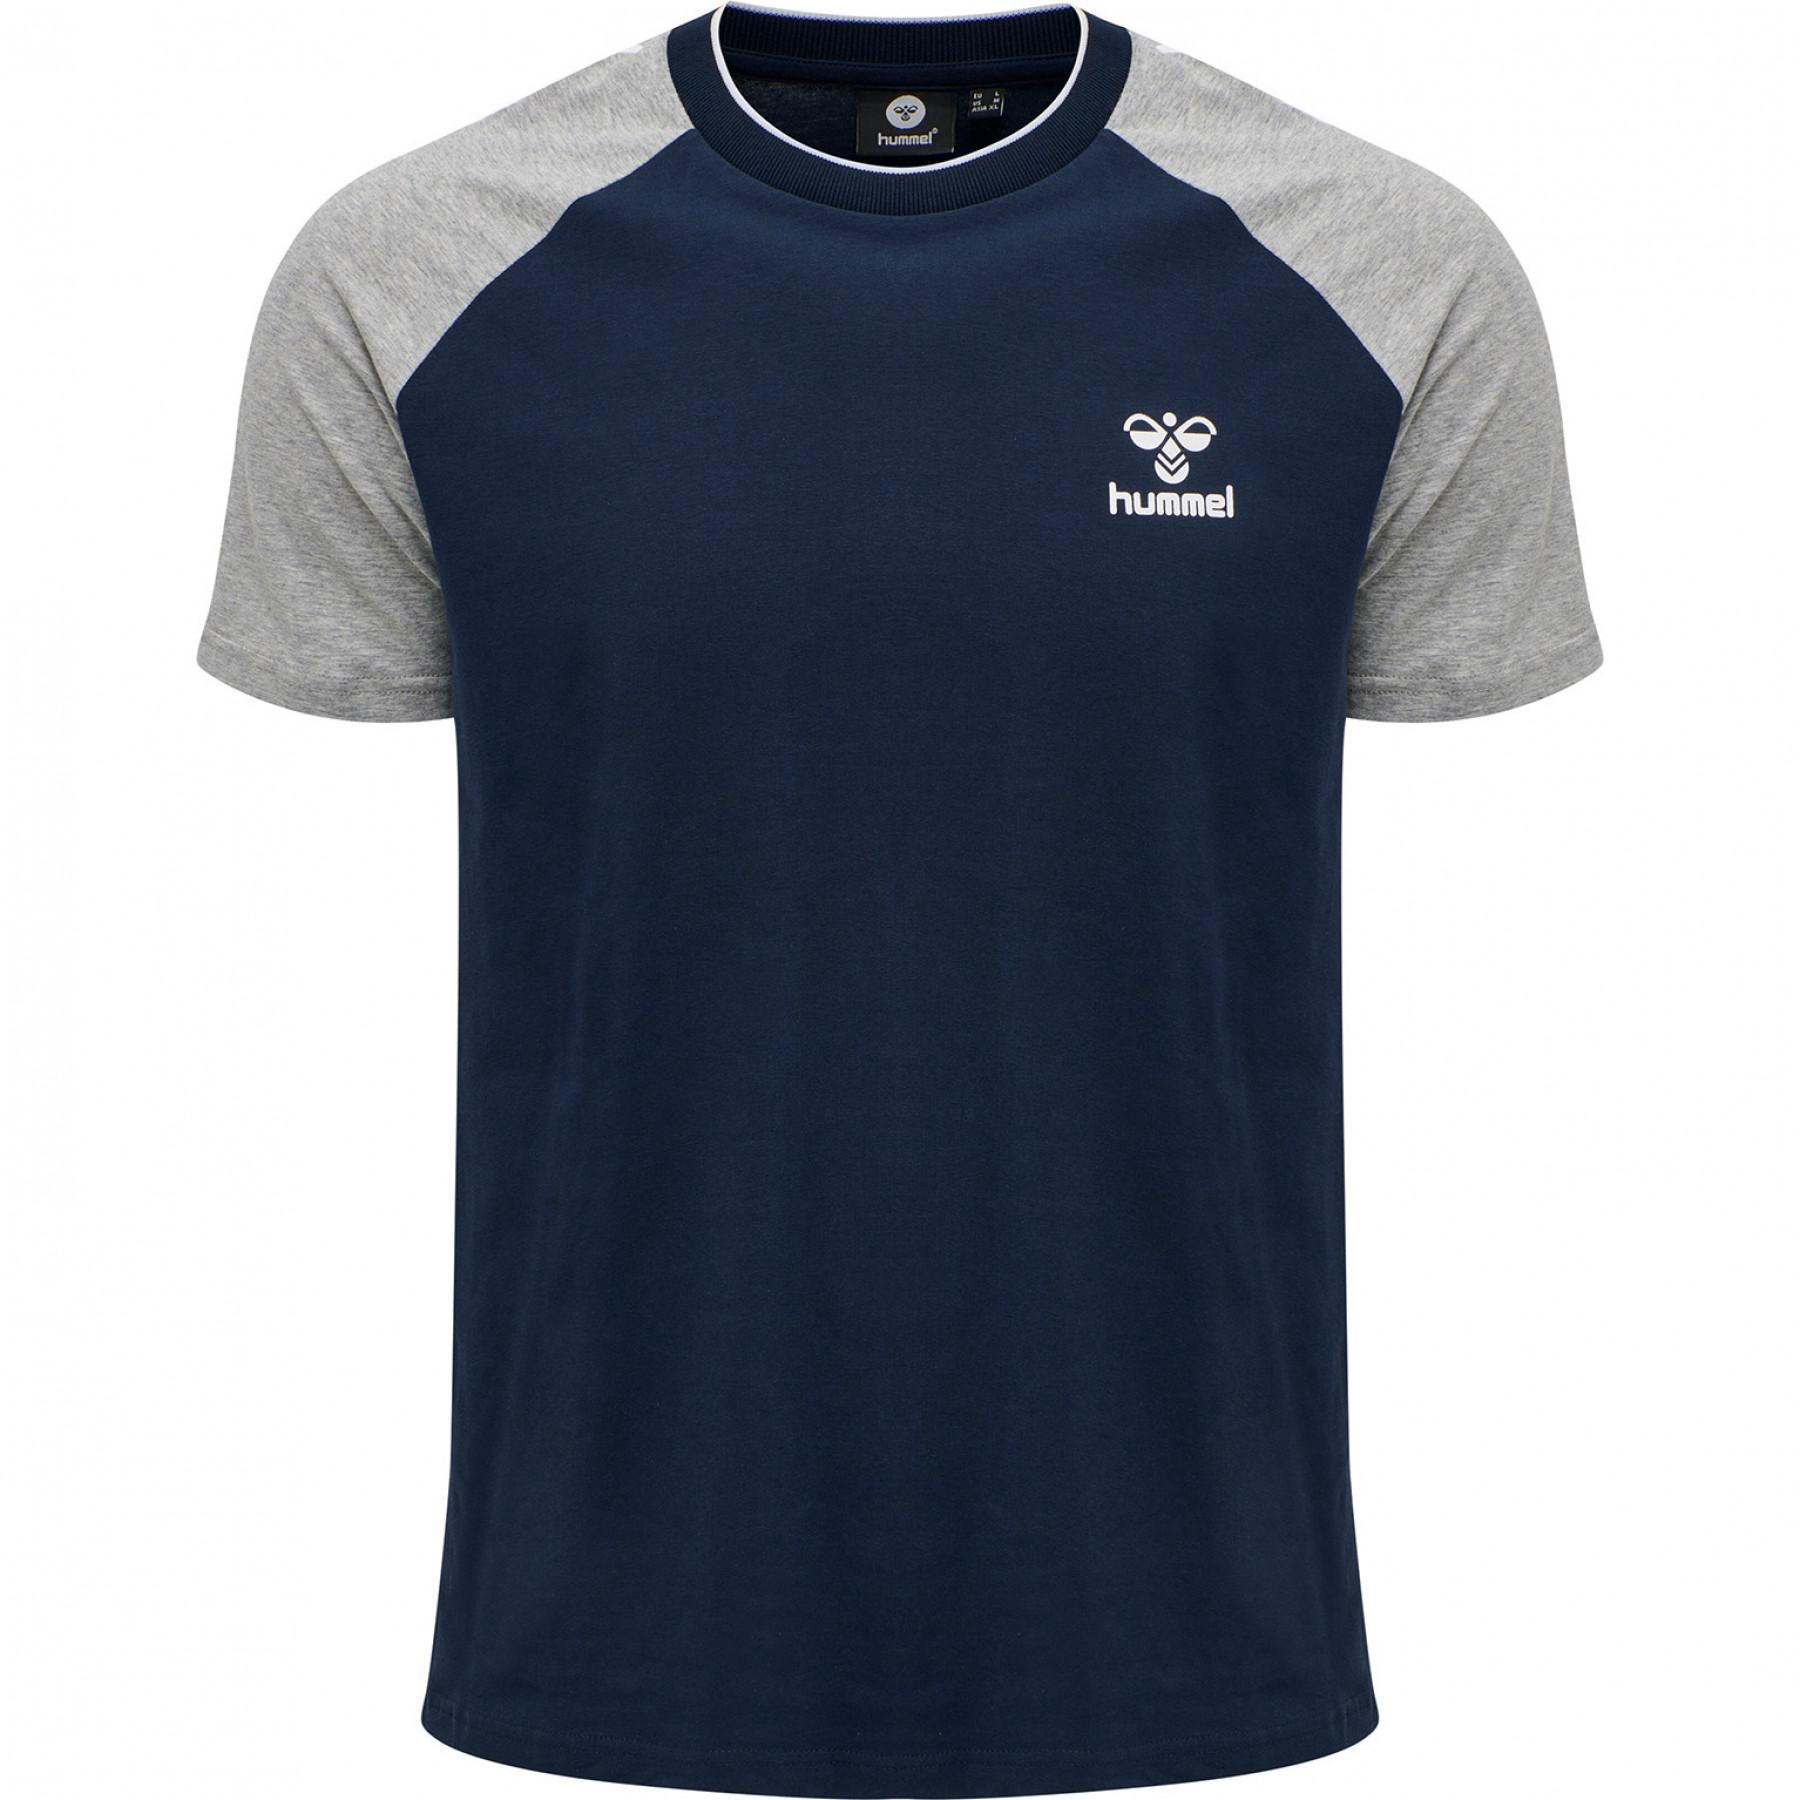 T-shirt Hummel hmlmark - T-shirts and polos - Textile - Handball wear | 